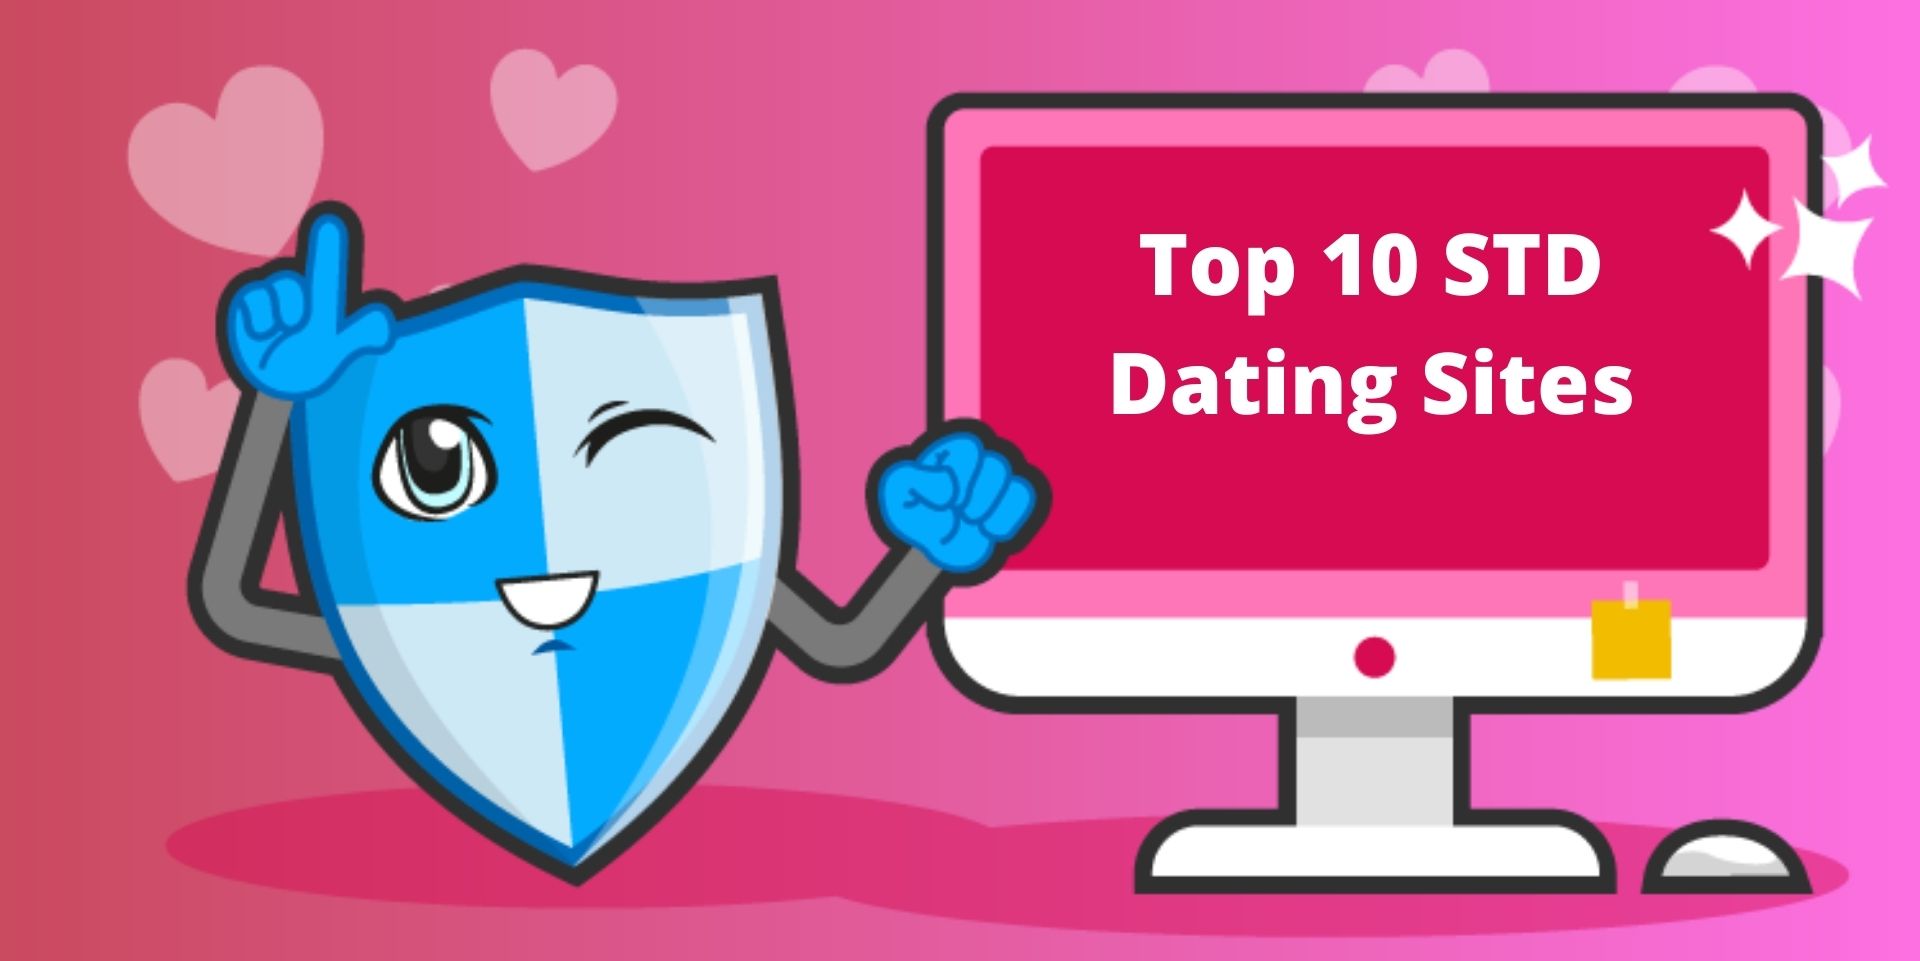 Top 10 STD Dating Sites